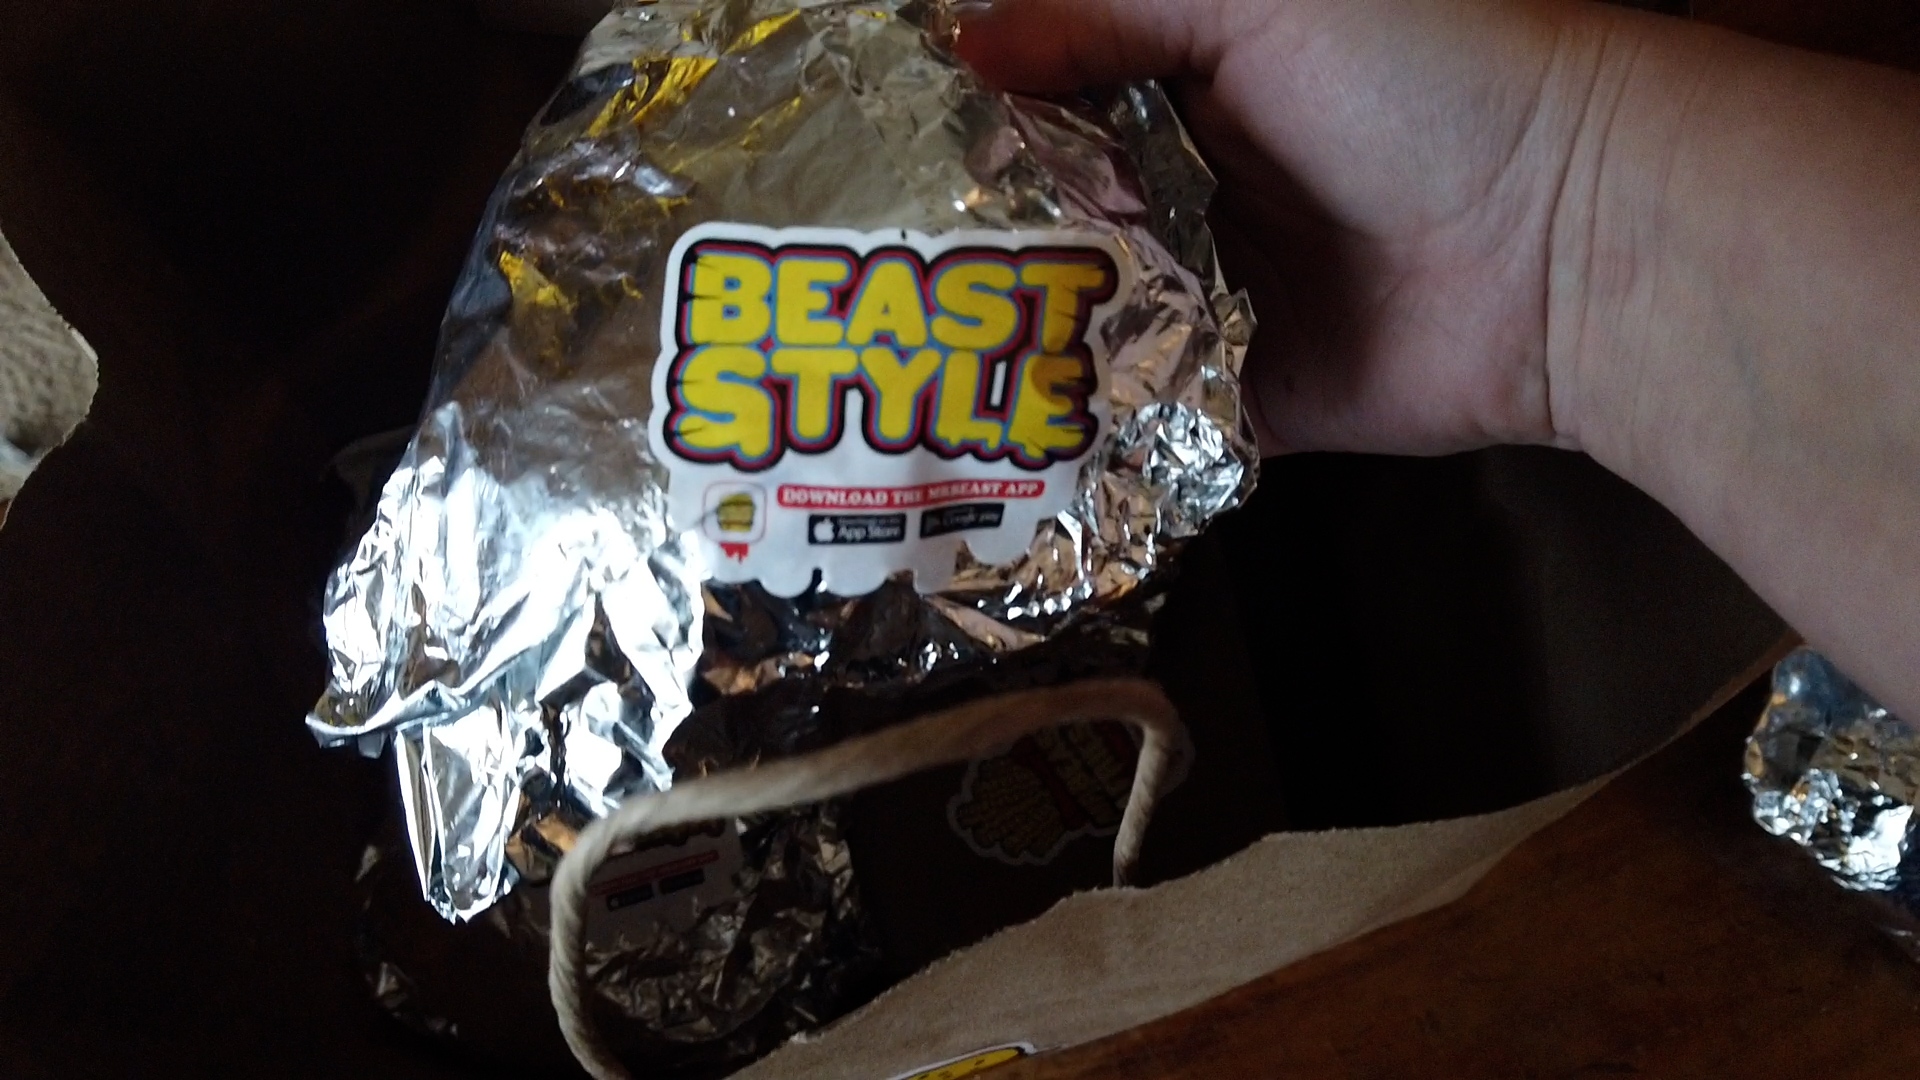 beast style burger